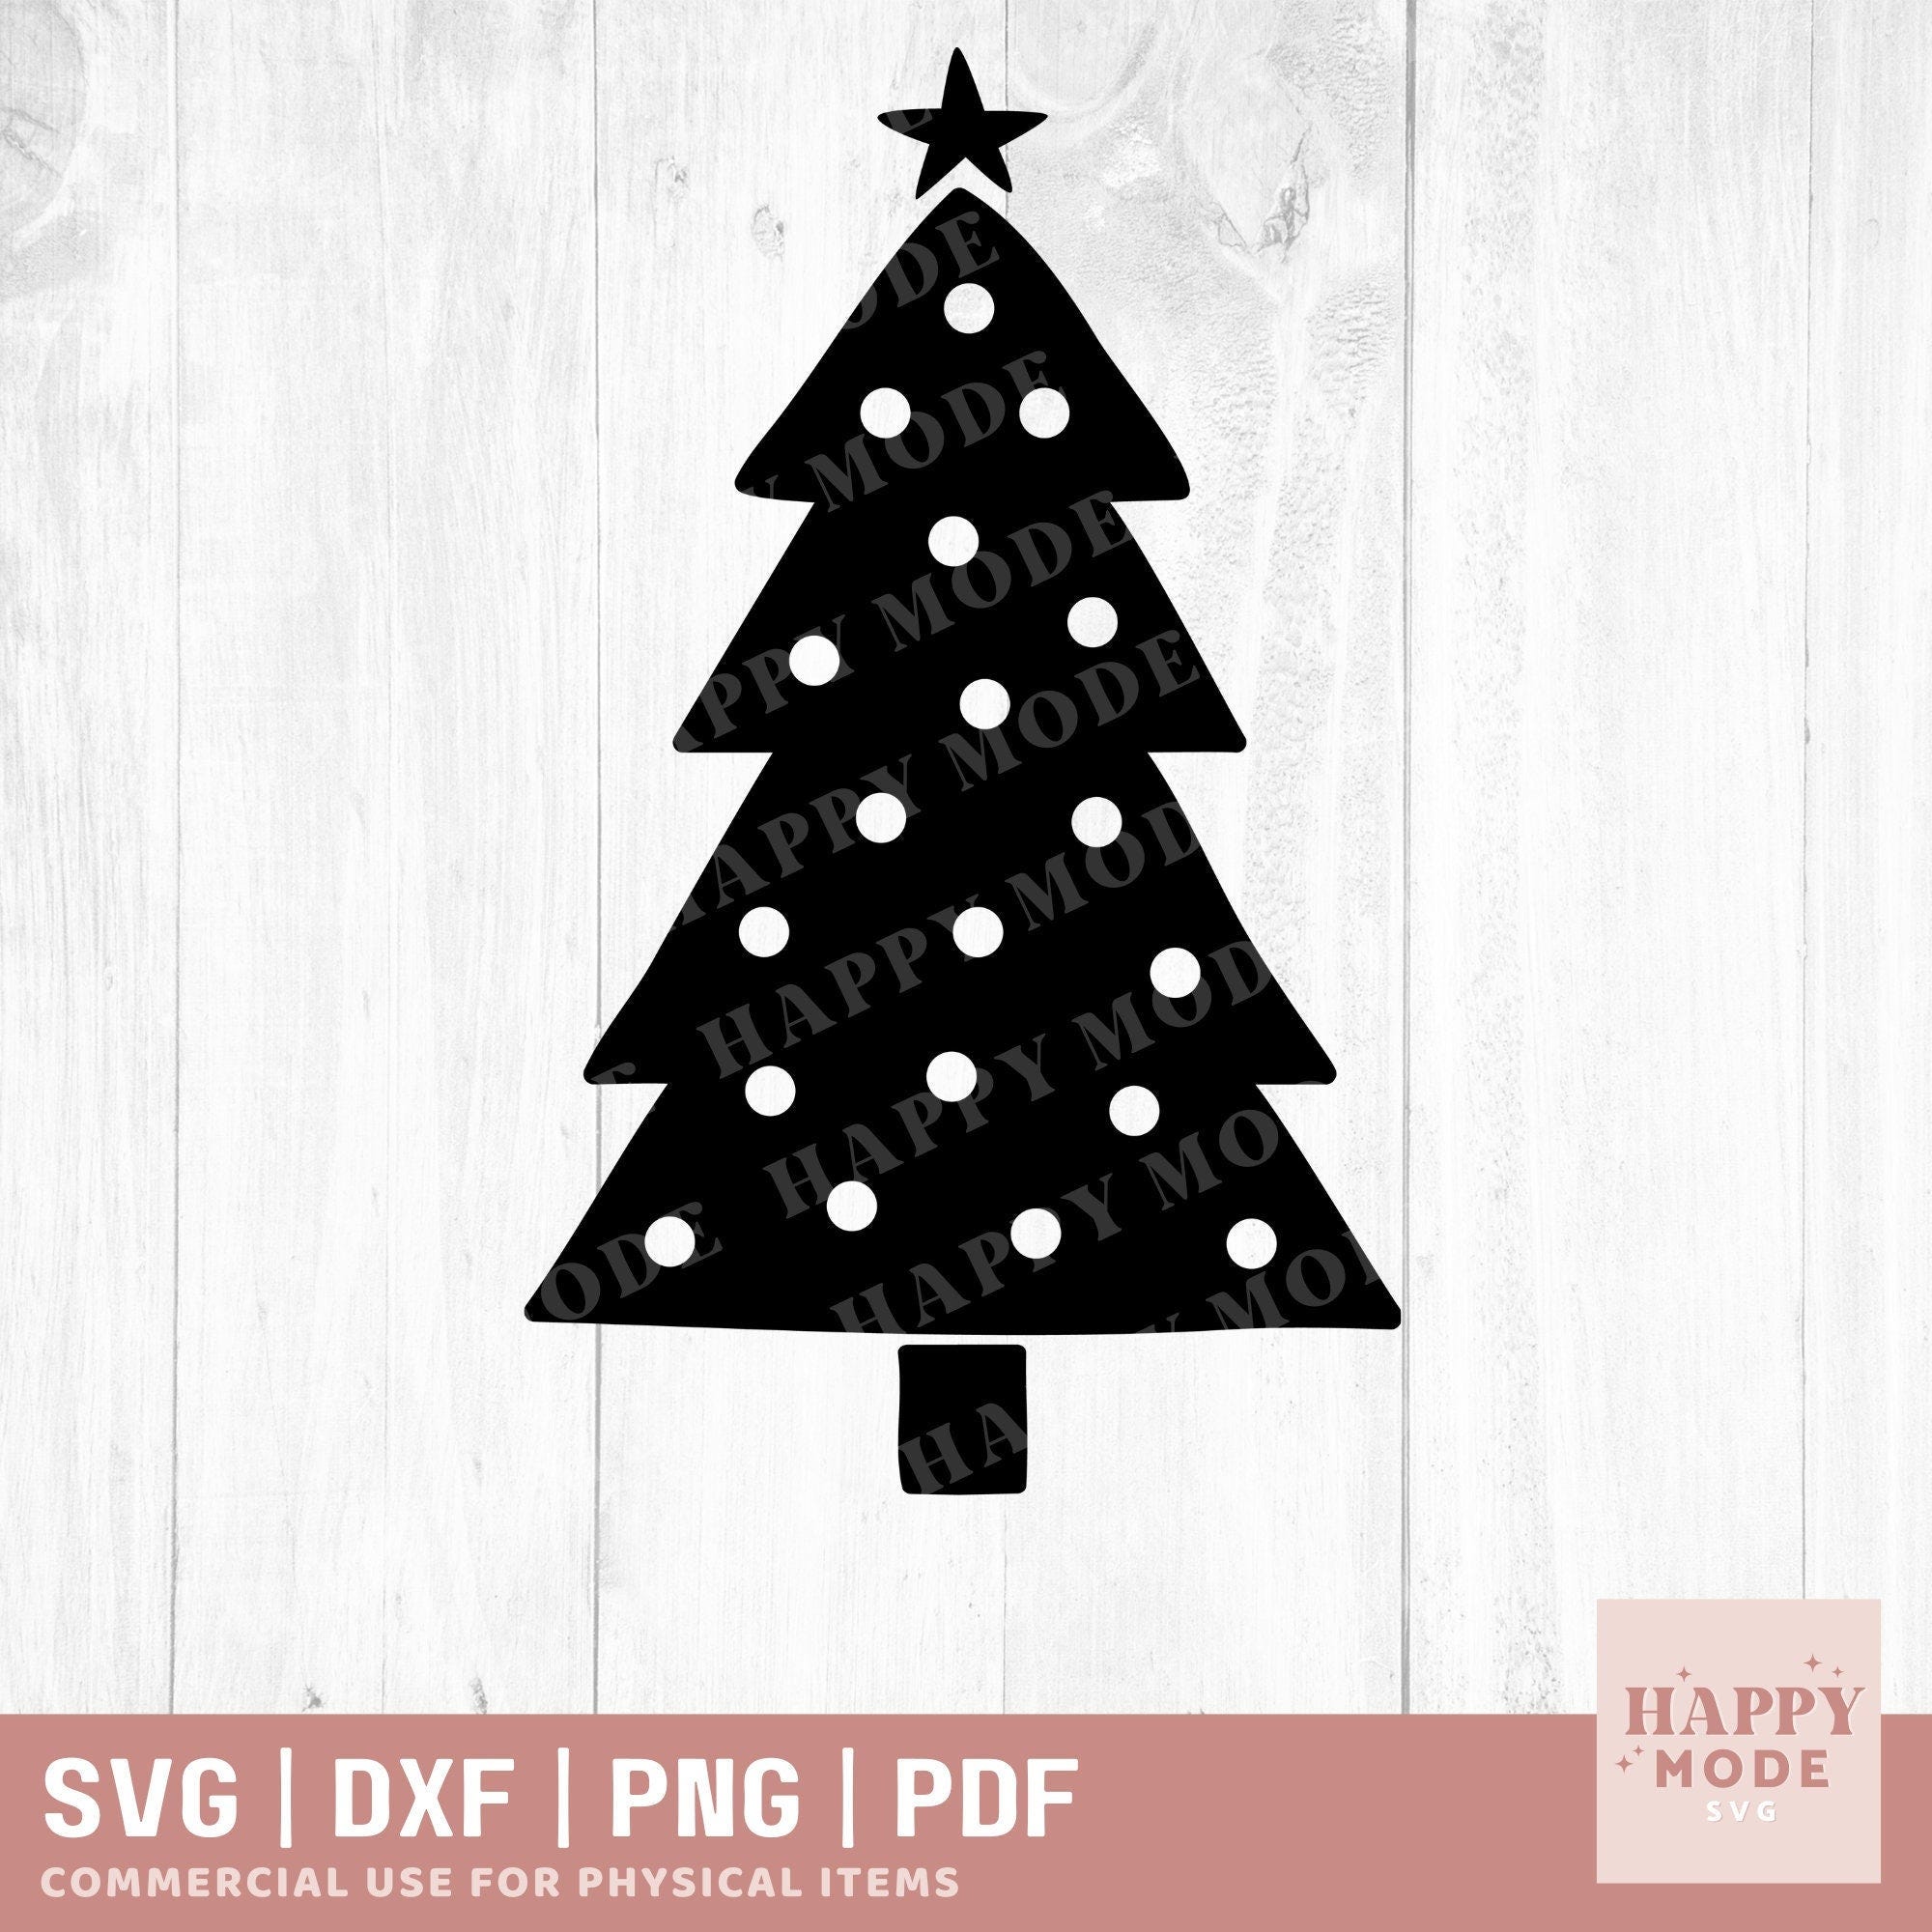 Christmas Tree SVG - Christmas Tree Cut File - Christmas Tree Clipart - Pine Tree SVG - Modern Christmas Tree Svg - Happy Holidays Svg